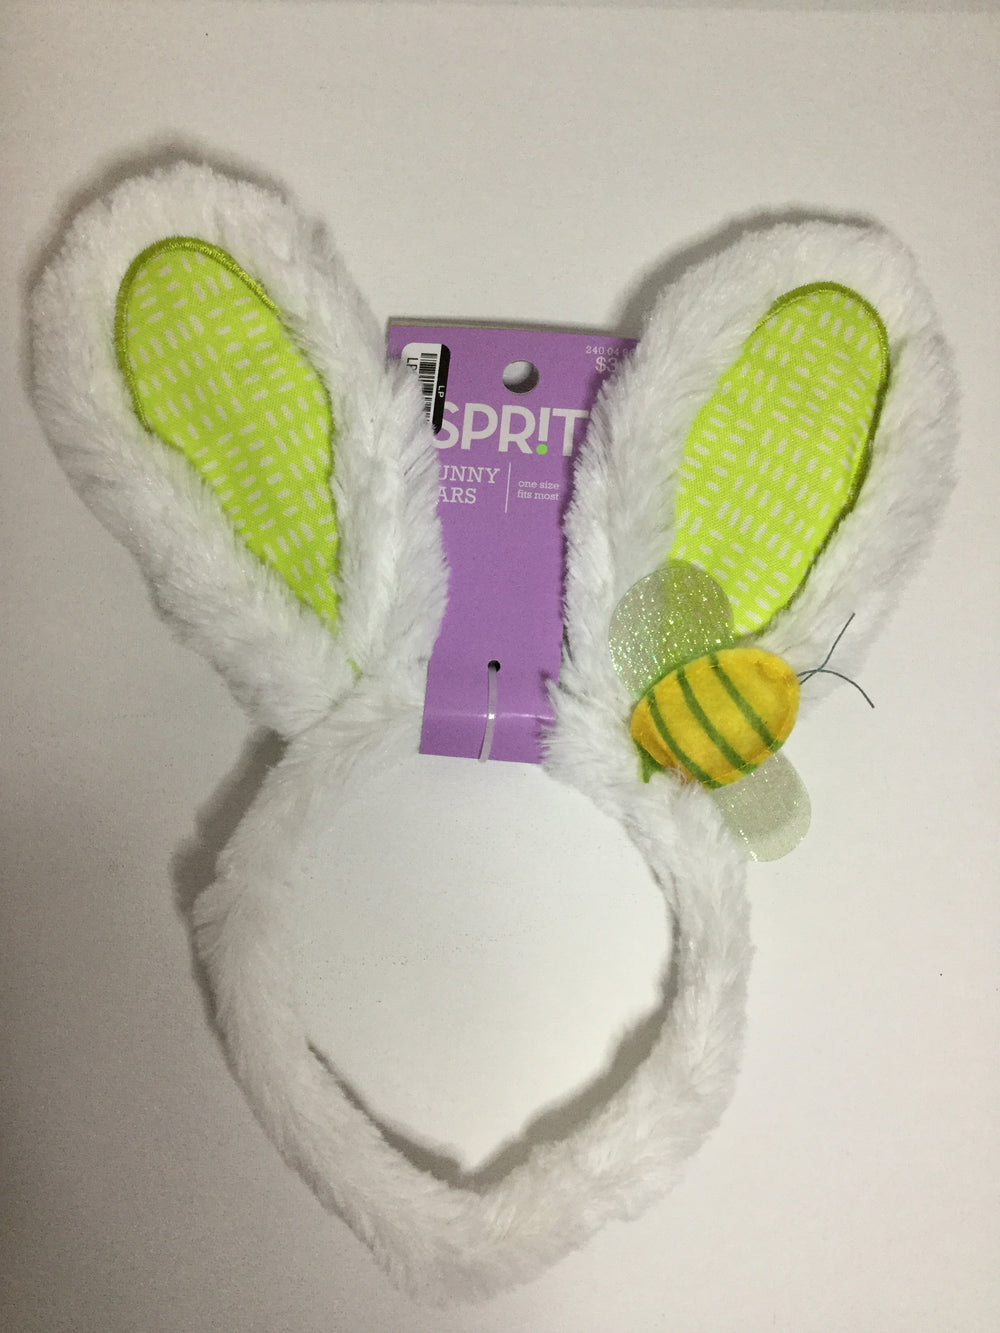 Spritz Bunny Ears